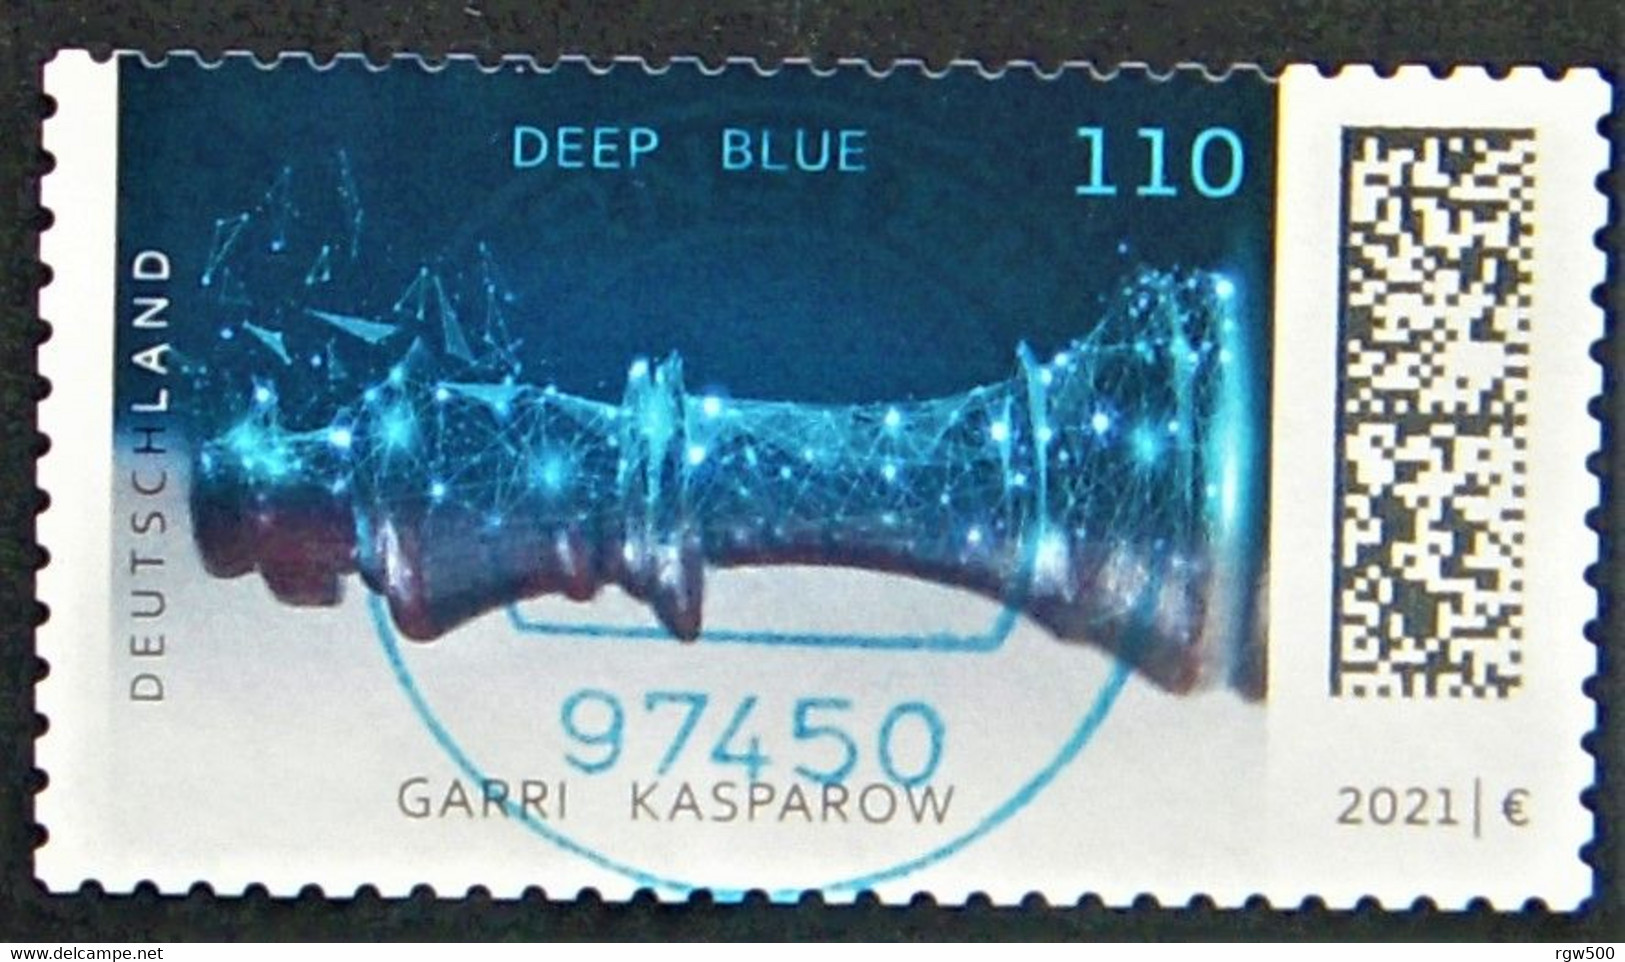 Bund/BRD November 2021 Skl Sondermarke "Deep Blue Schlägt Garri Kasparow" MiNr 3641 Aus FB 111,ersttagsgestempelt - Gebraucht